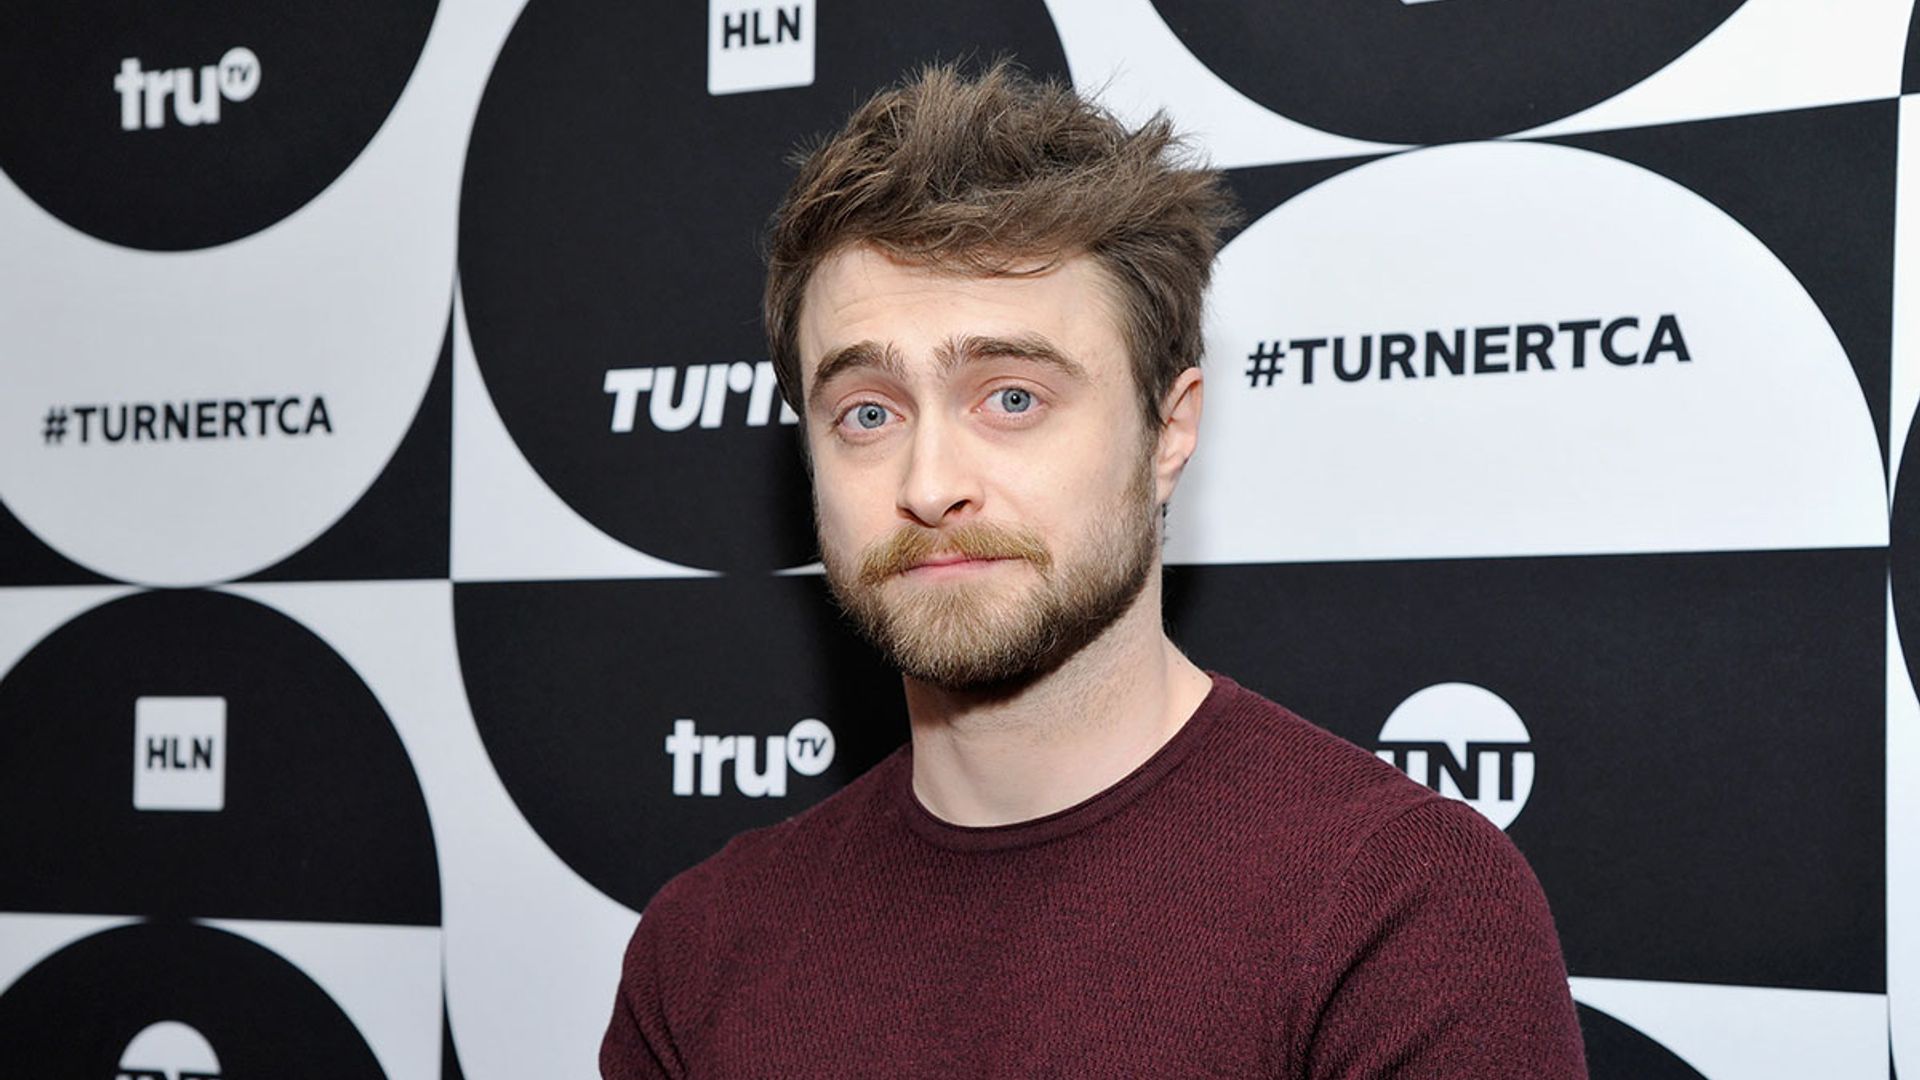 Harry Potter star Daniel Radcliffe reveals he was mistaken as being homeless